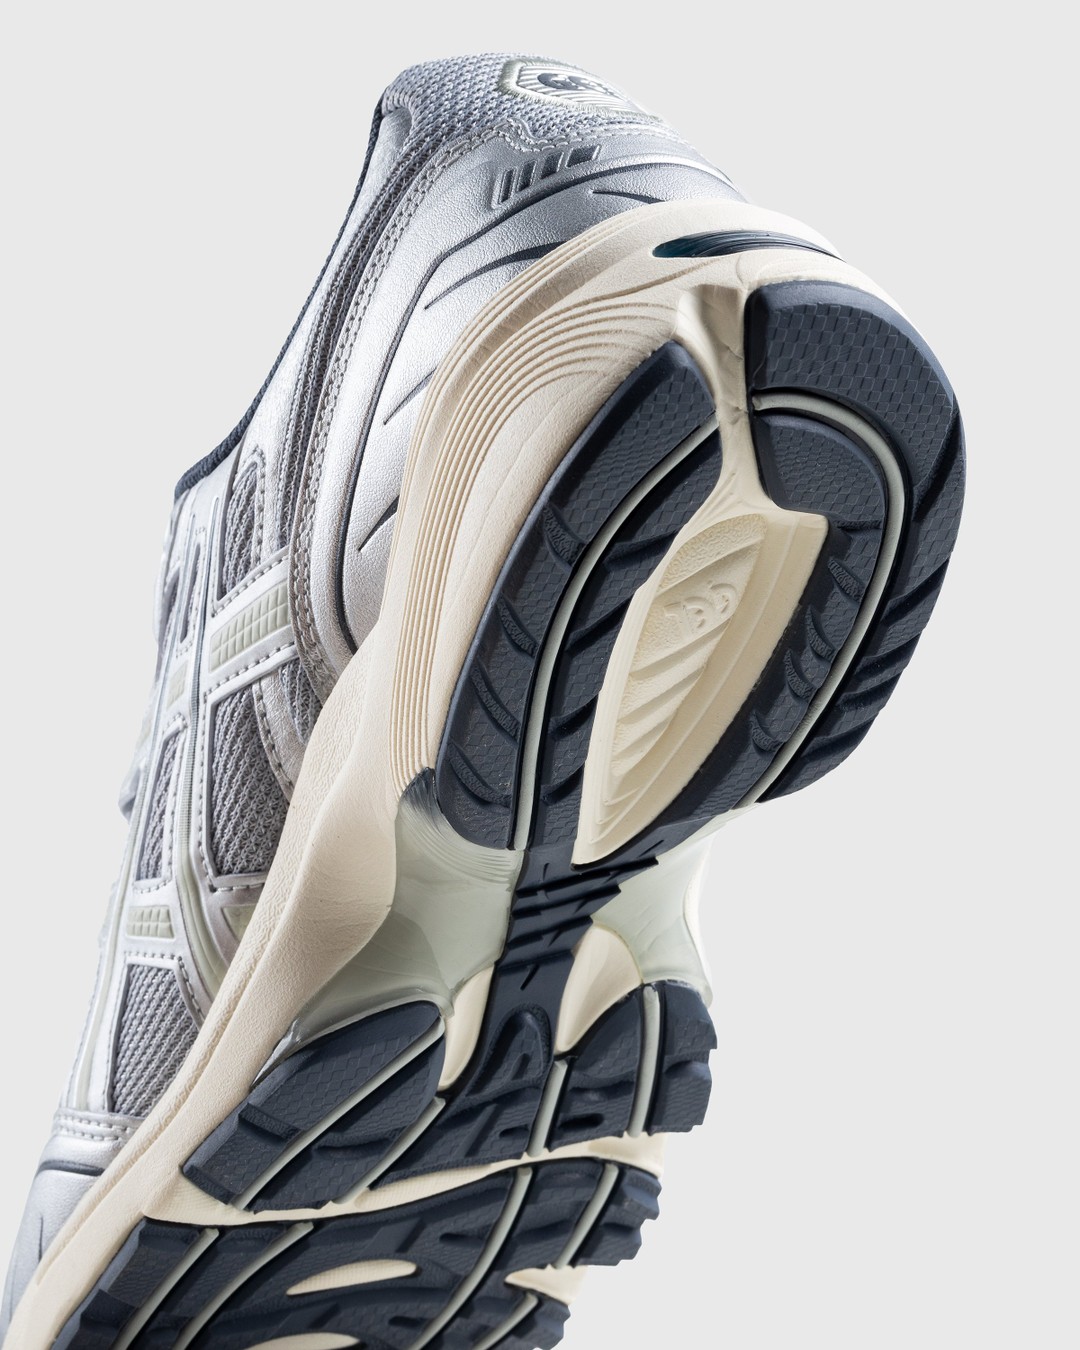 asics – GEL-1090 Piedmont Gray/Tarmac - Sneakers - Silver - Image 6